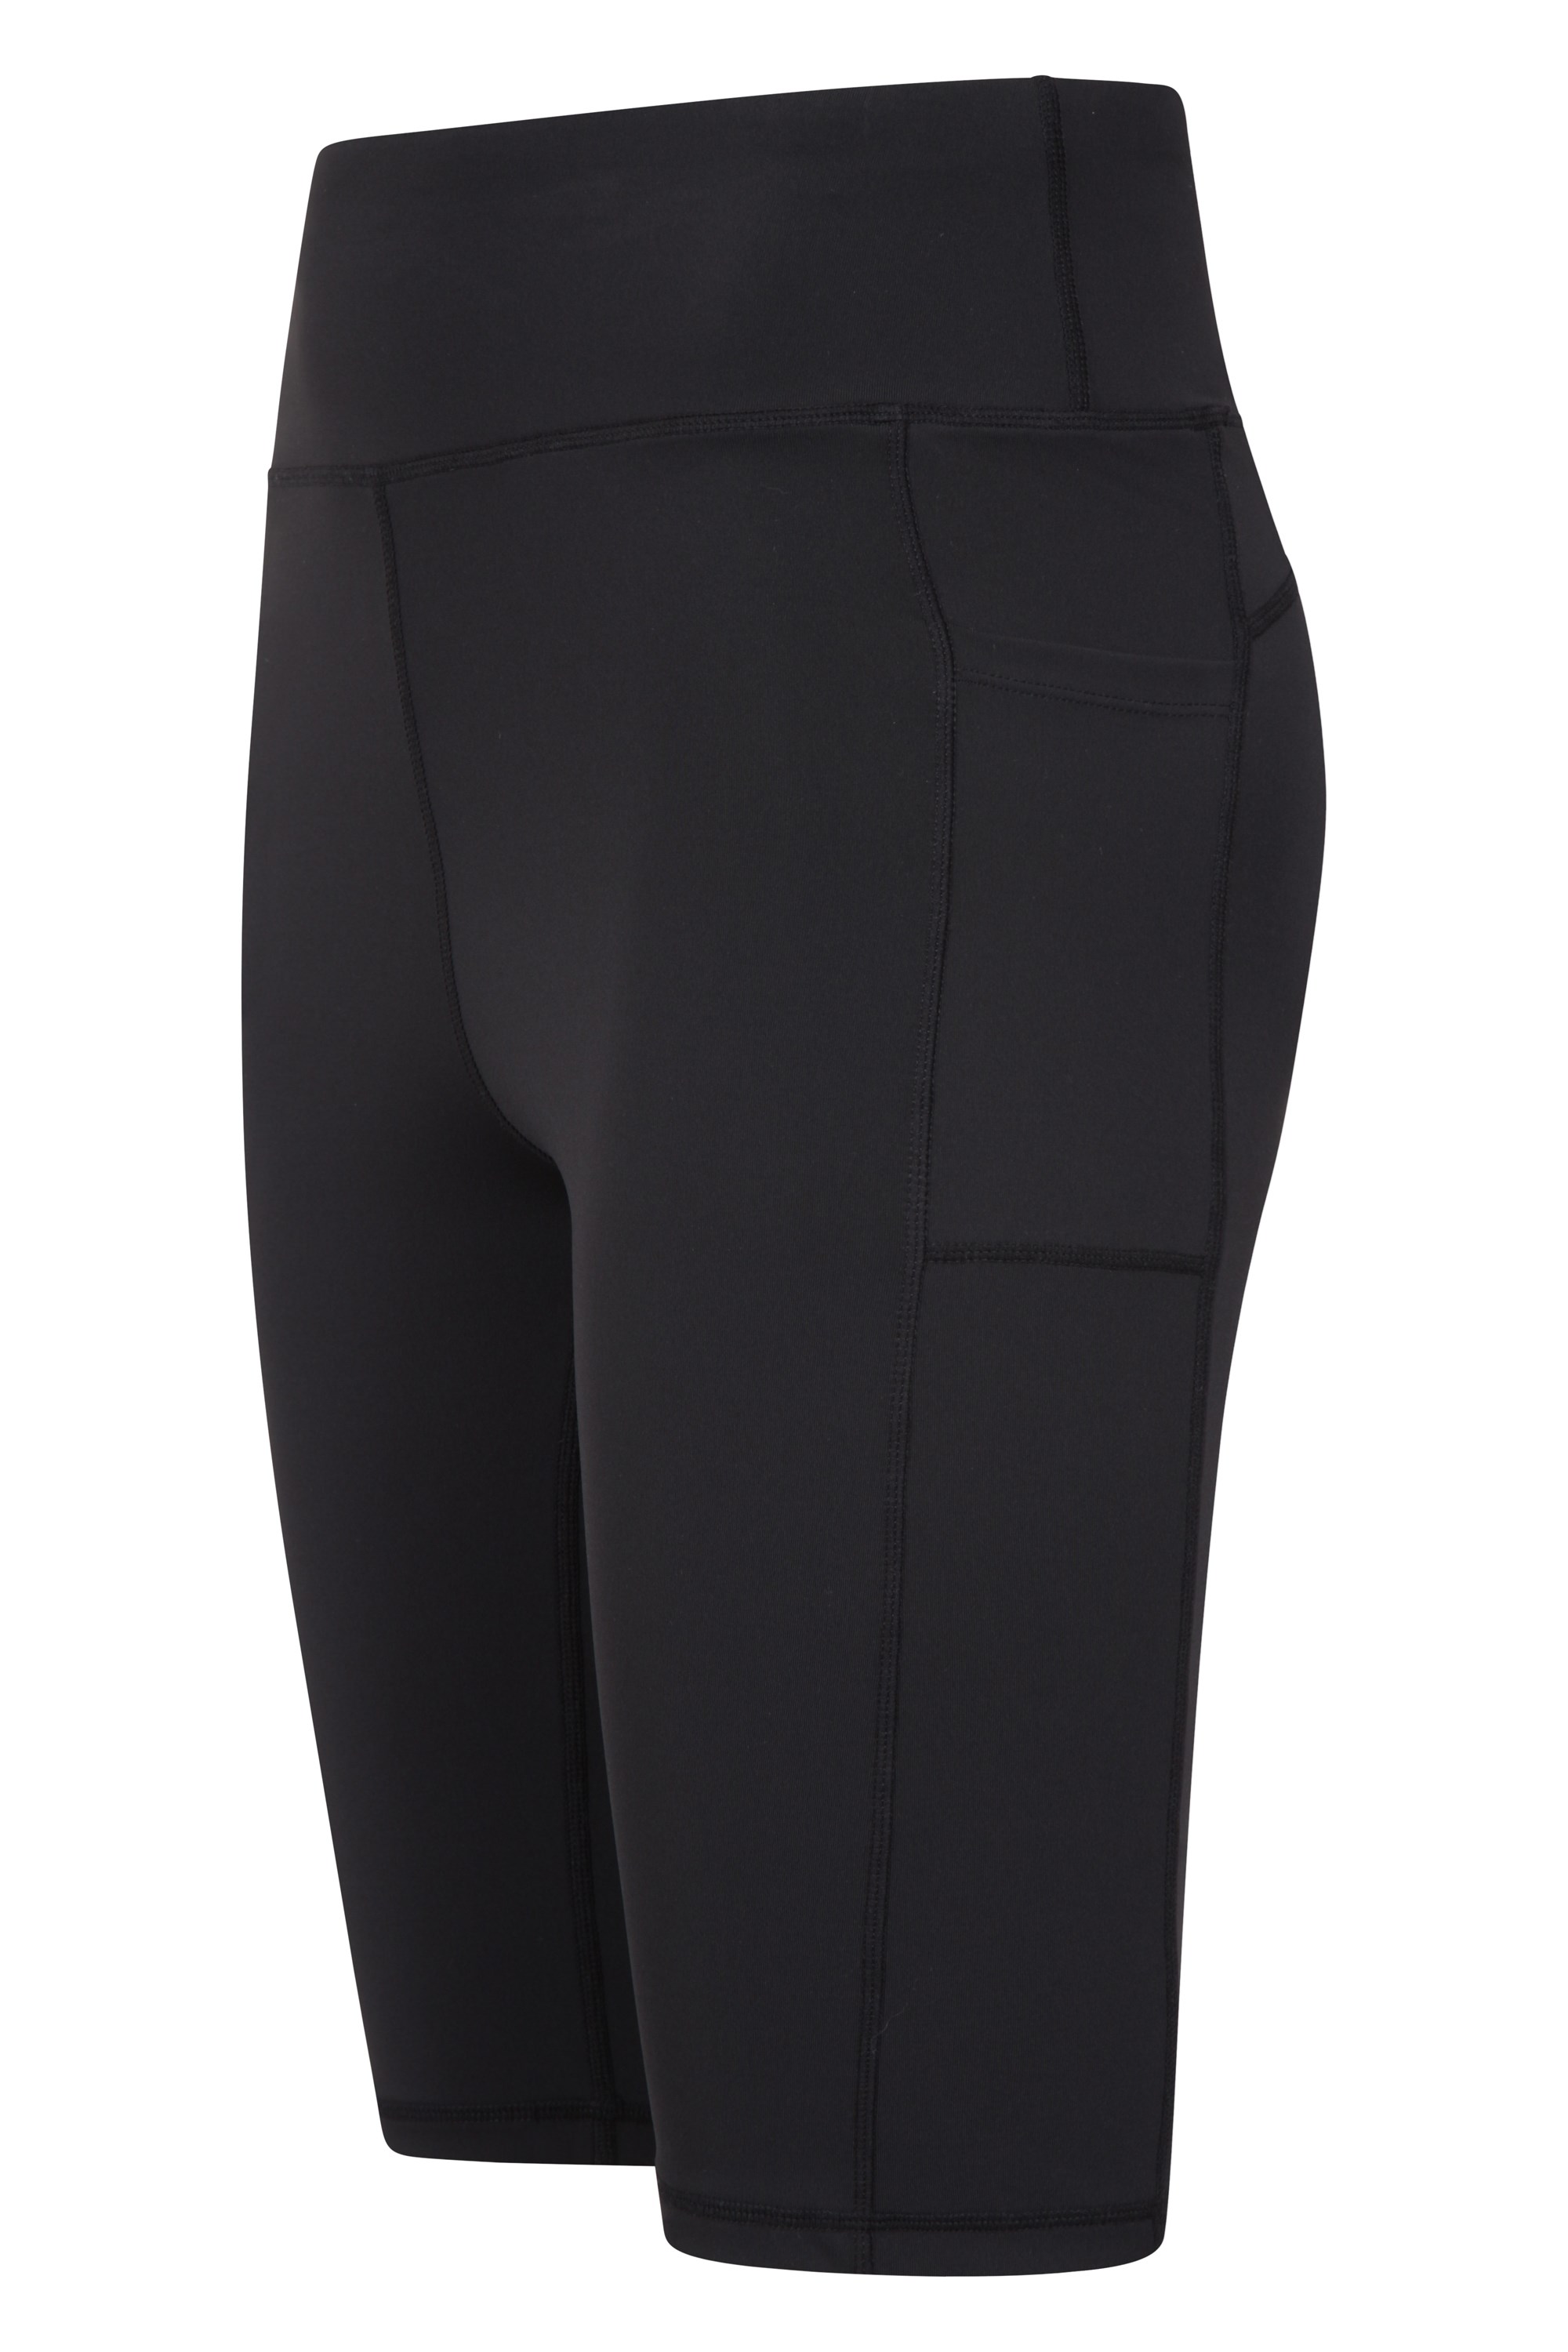 Women Shiny Satin Short Leggings Pants Zipper Open Crotch Skinny Gym Yoga  Shorts | eBay